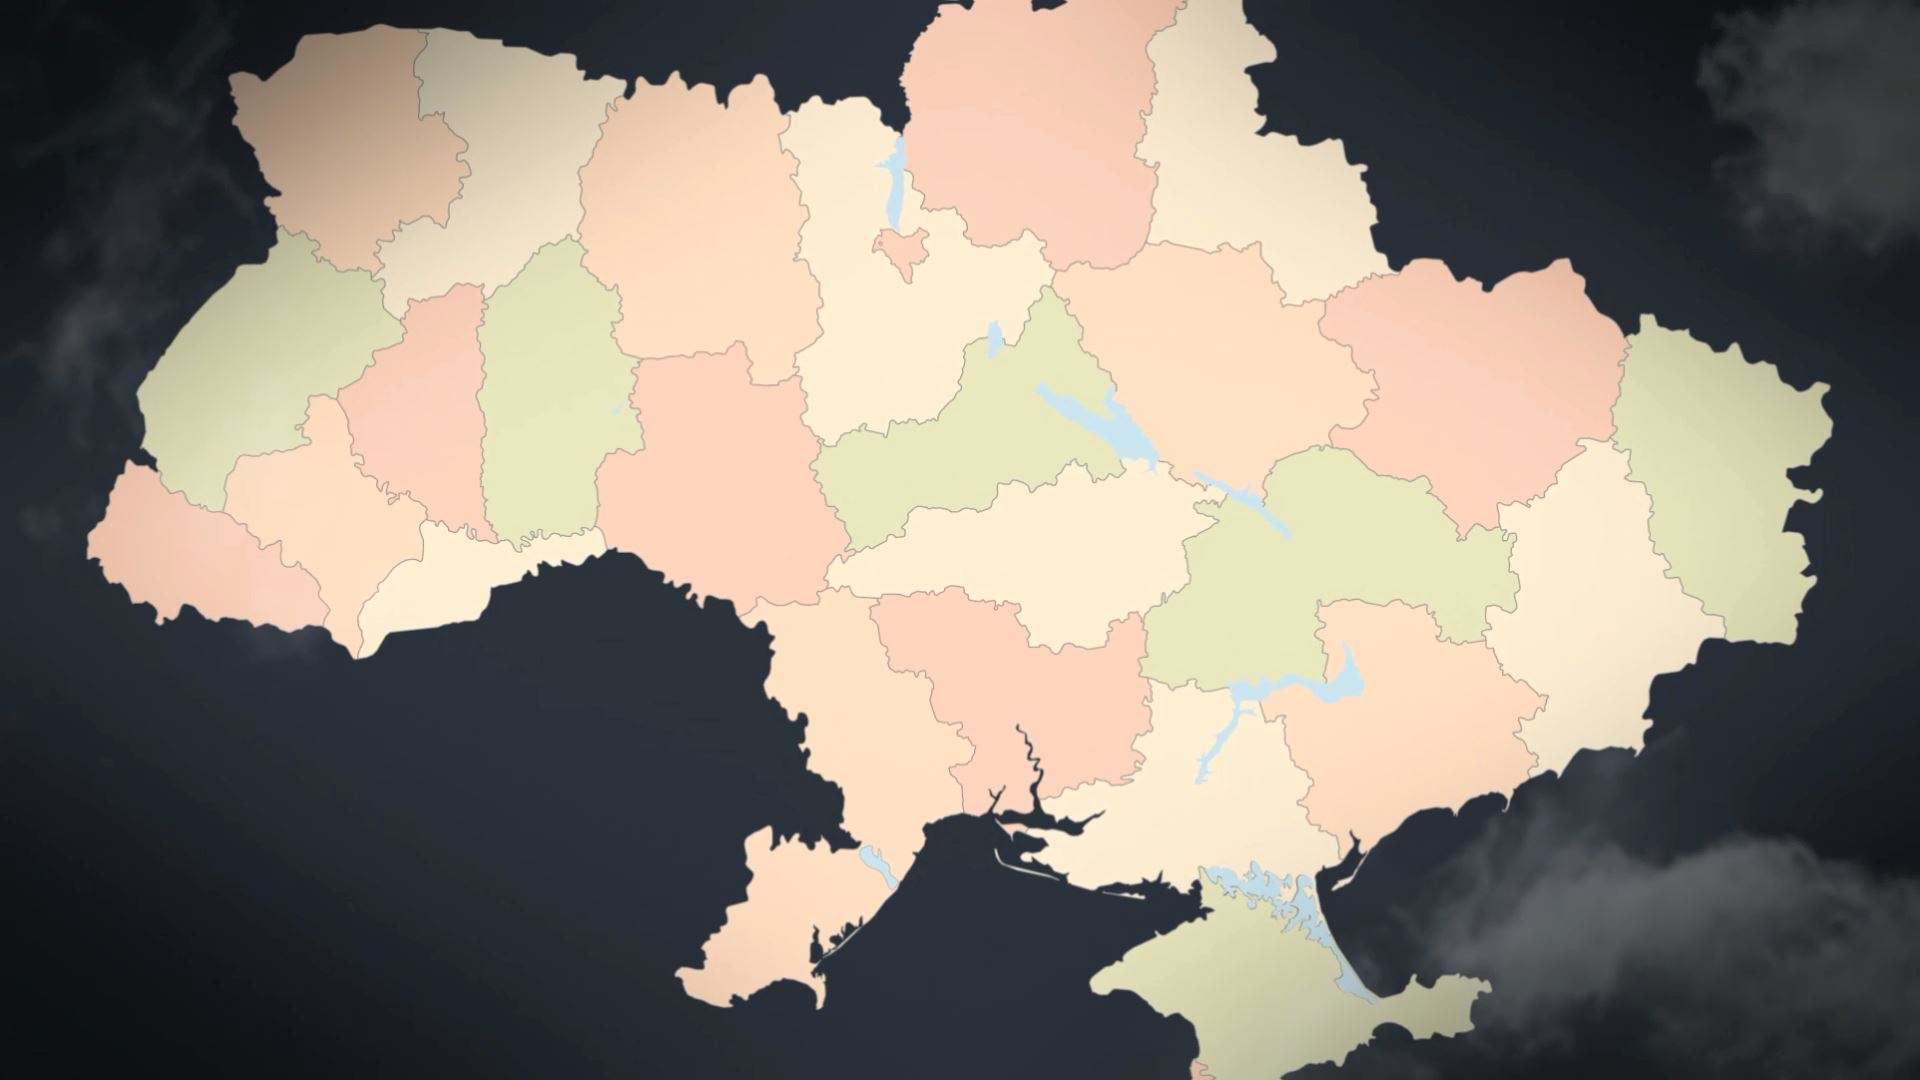  Ukraine Map - Ukraine UKR Map Kit 